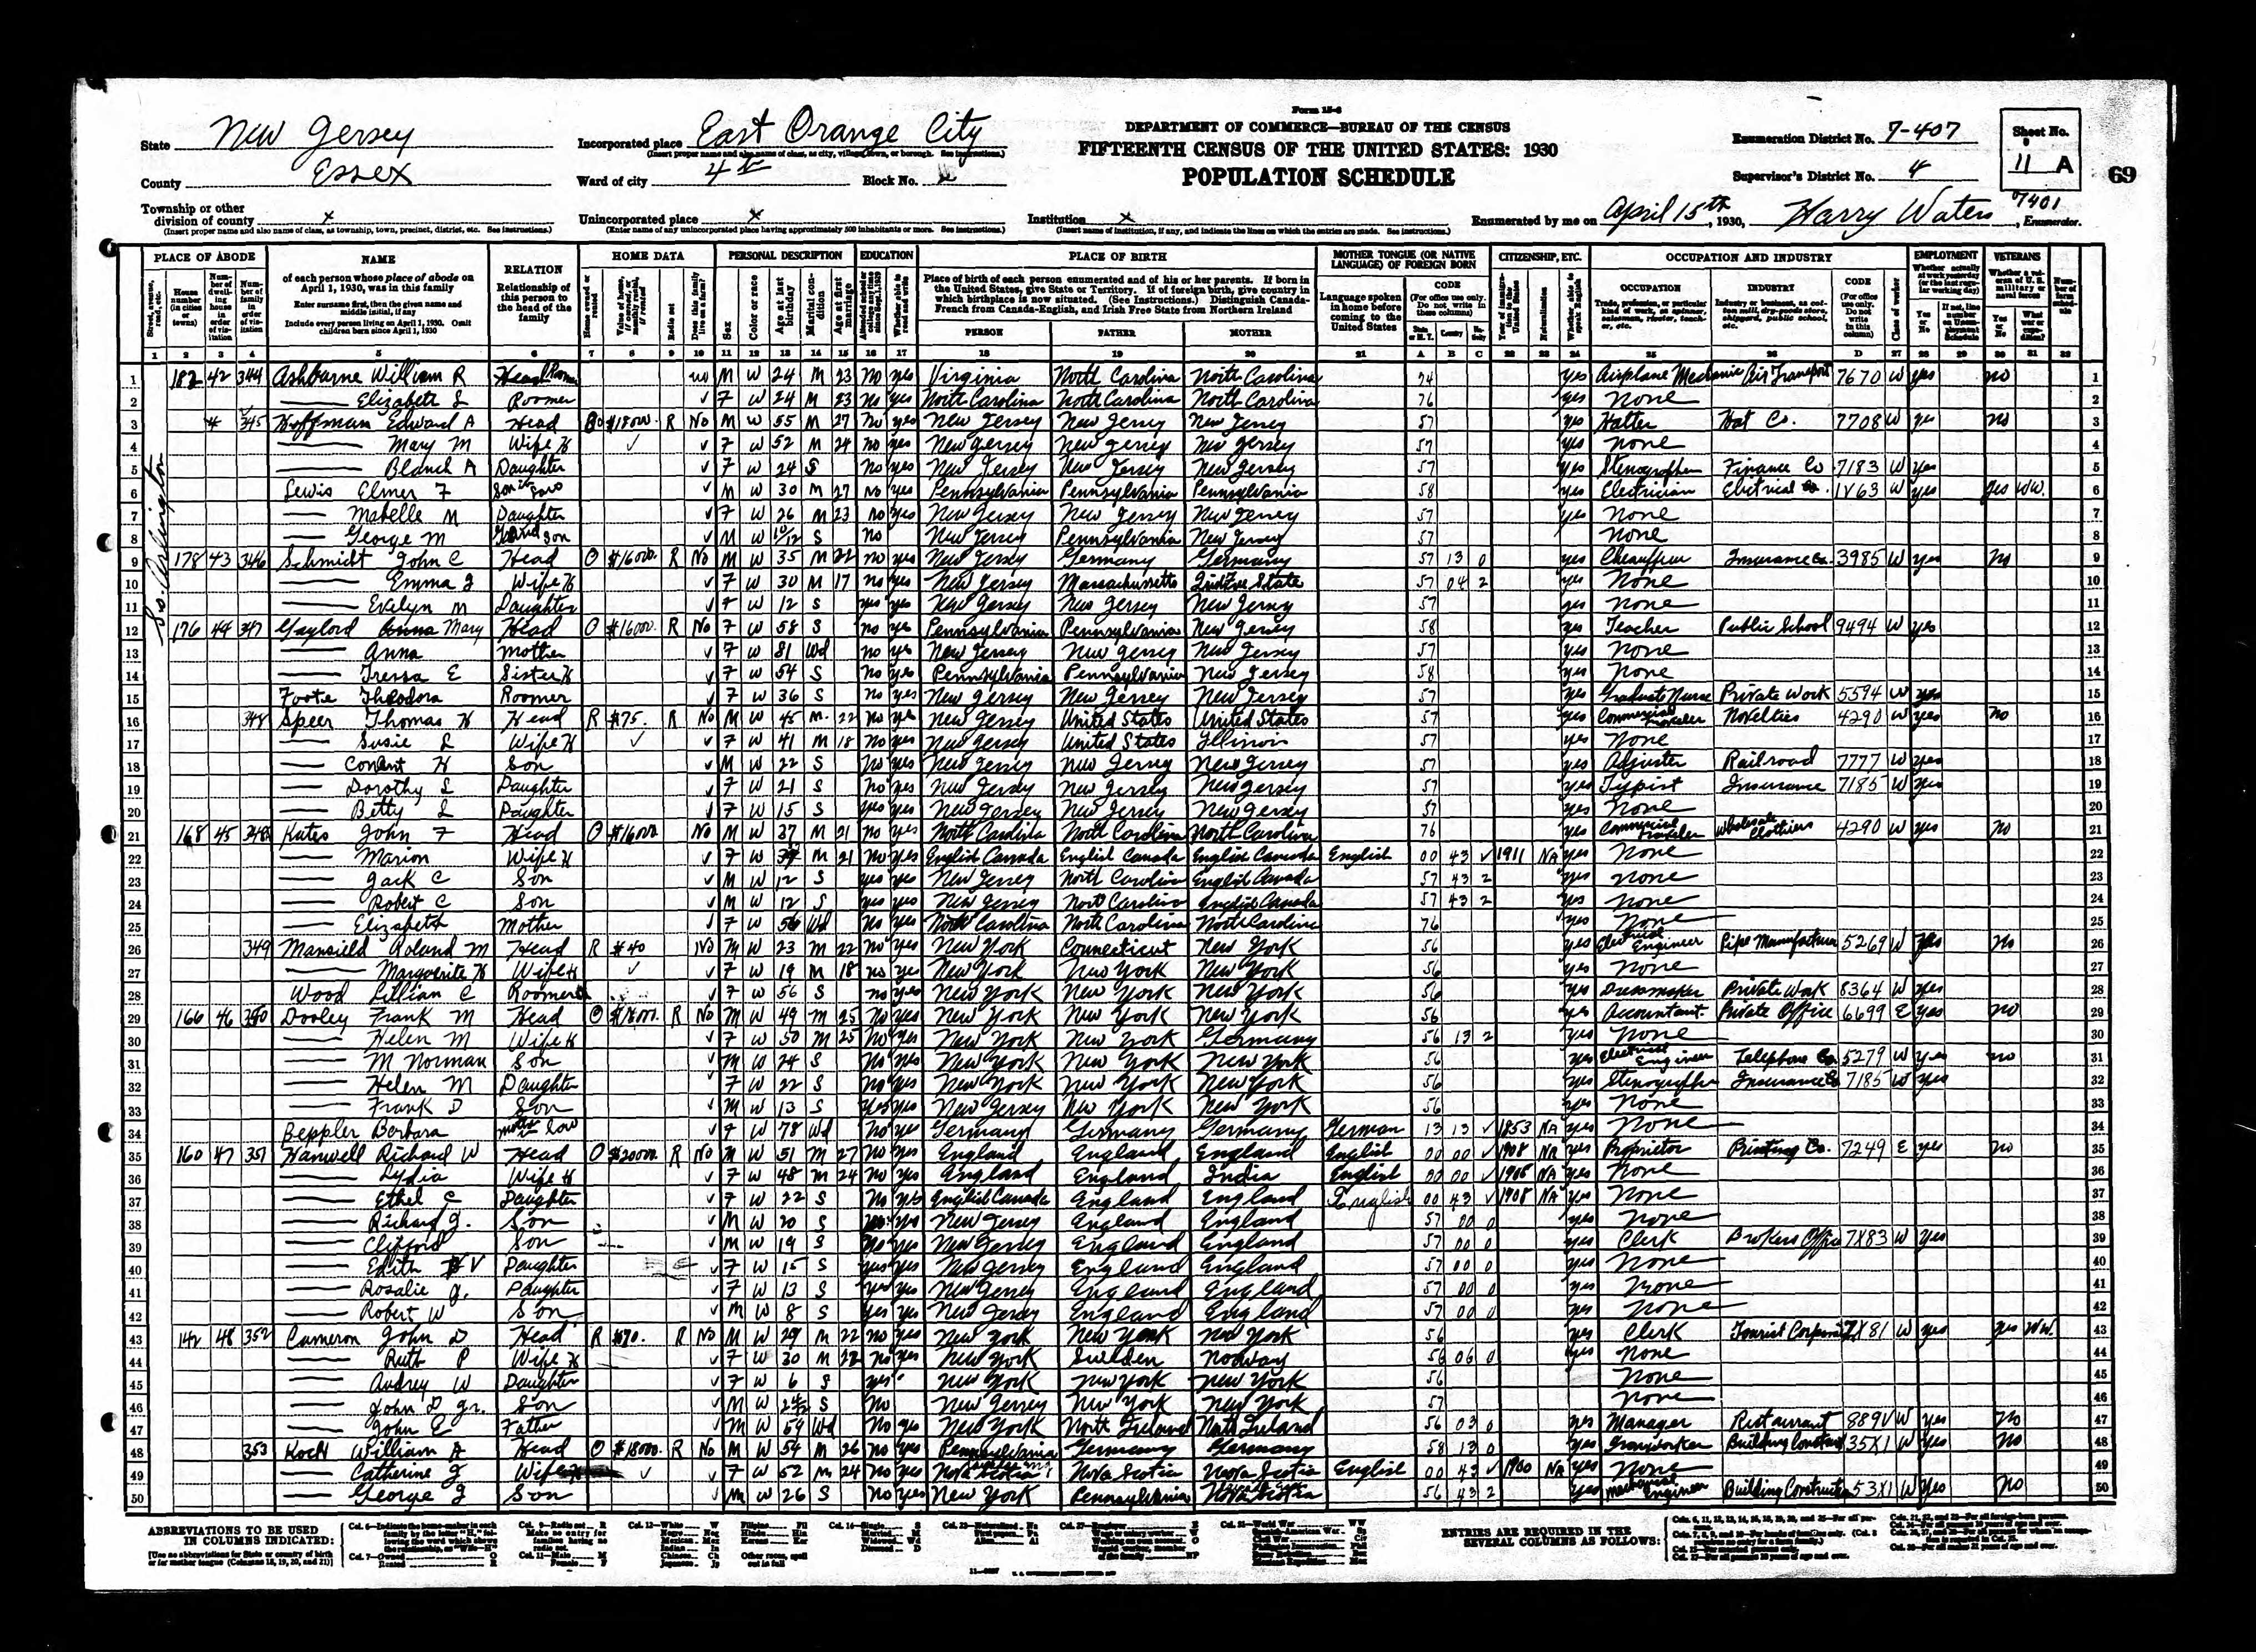 1930 US Census, Robert C. Kates, line 24